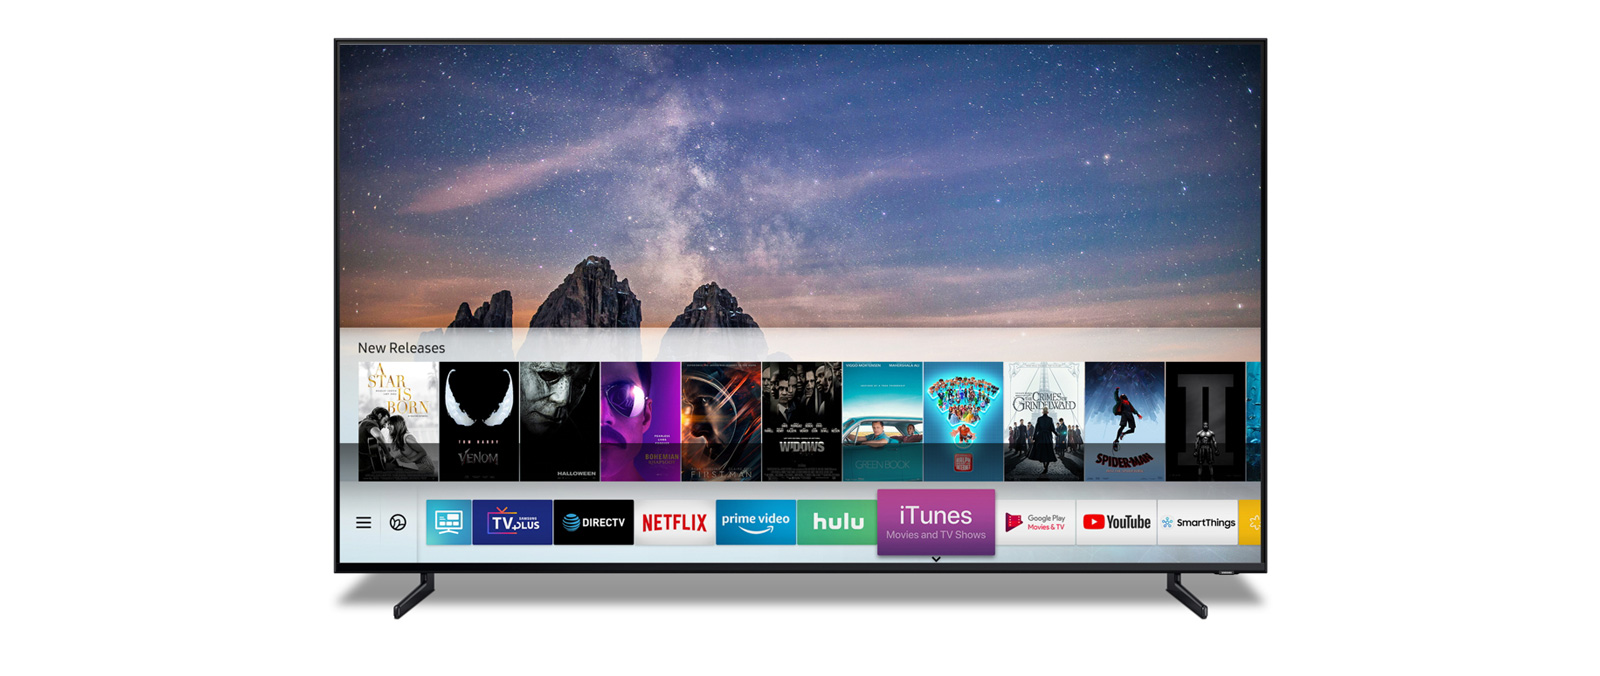 Apple iTunes Movies e AirPlay 2 su Samsung Smart TV 2018 e 2019